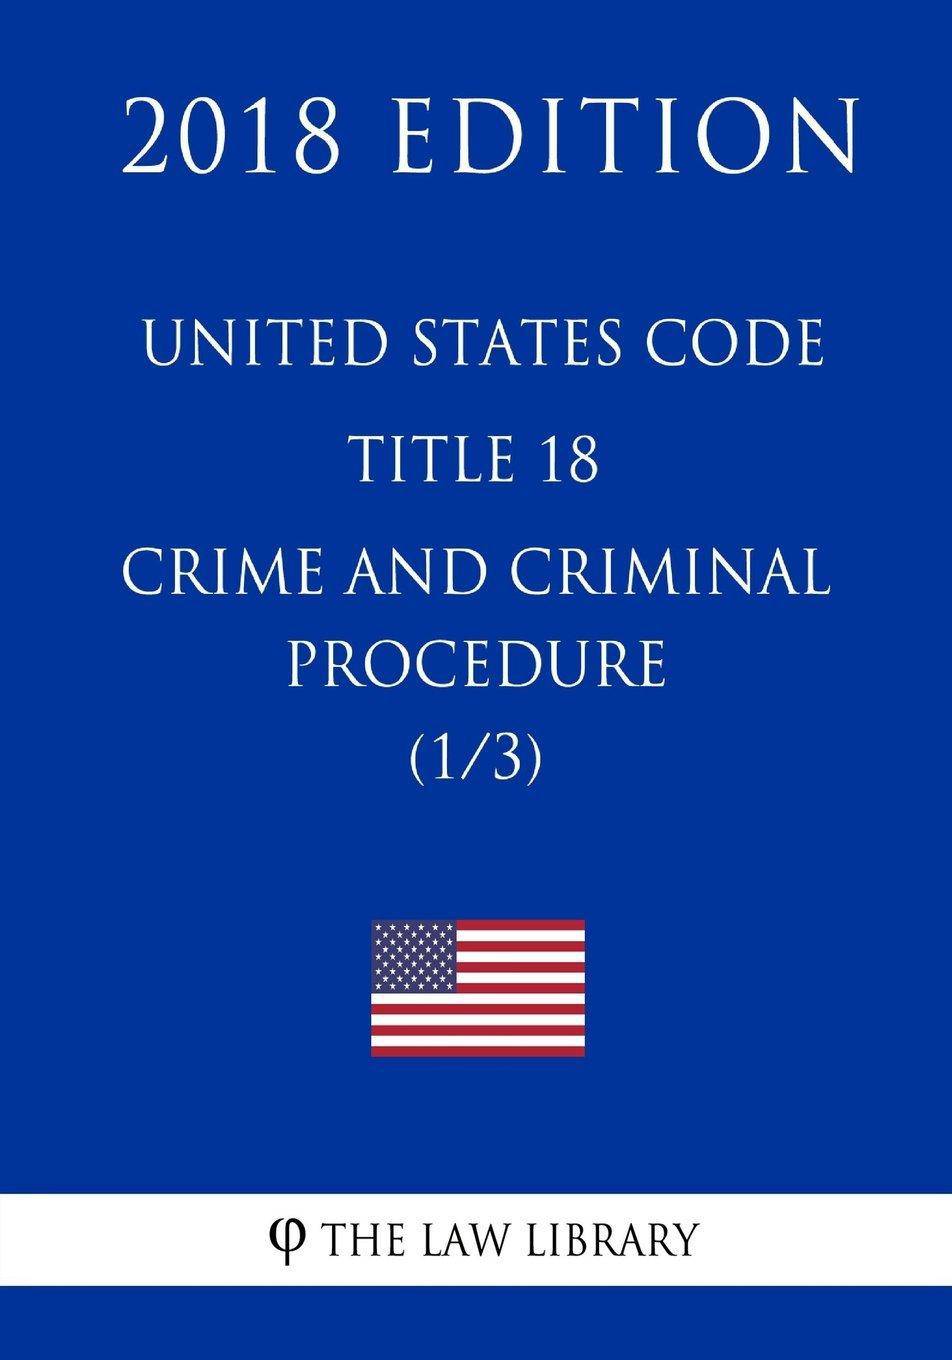 United States Code - Title 18 - Crimes and Criminal Procedure (1/3) (2018 Edition) - SureShot Books Publishing LLC